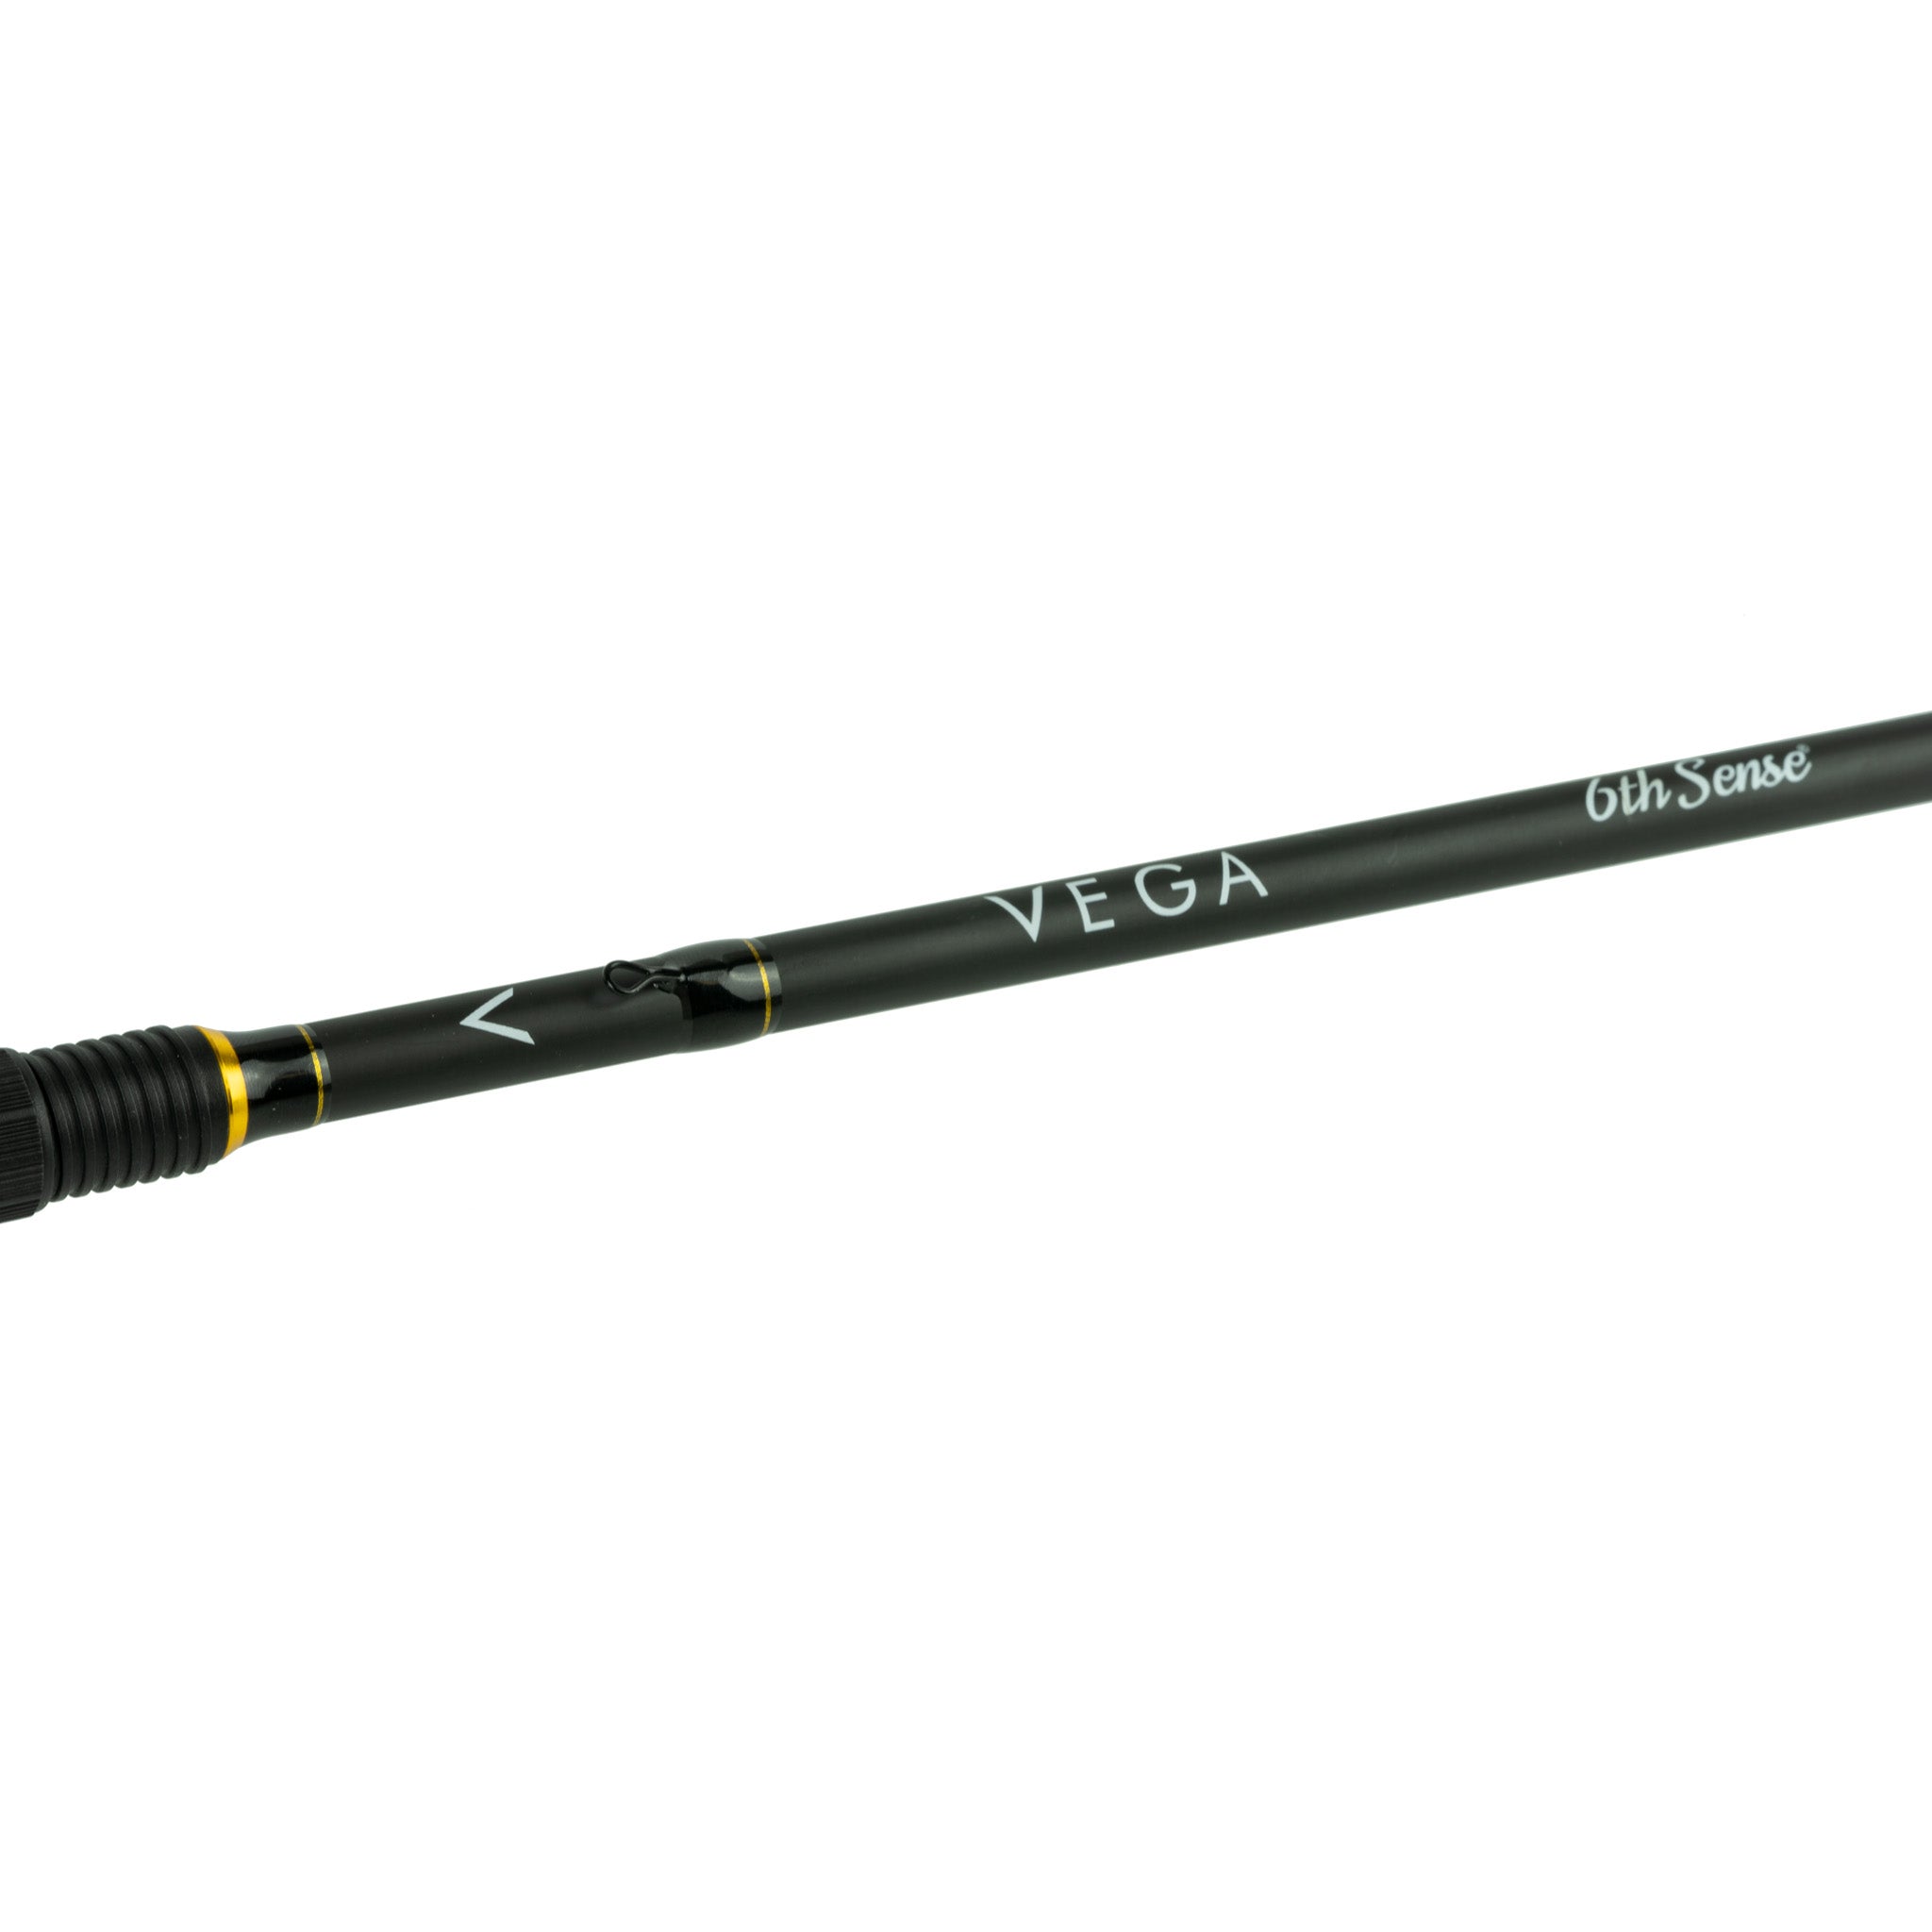 6th Sense Fishing - Vega Series Casting Rod - 7'3 Heavy, Mod-Fast